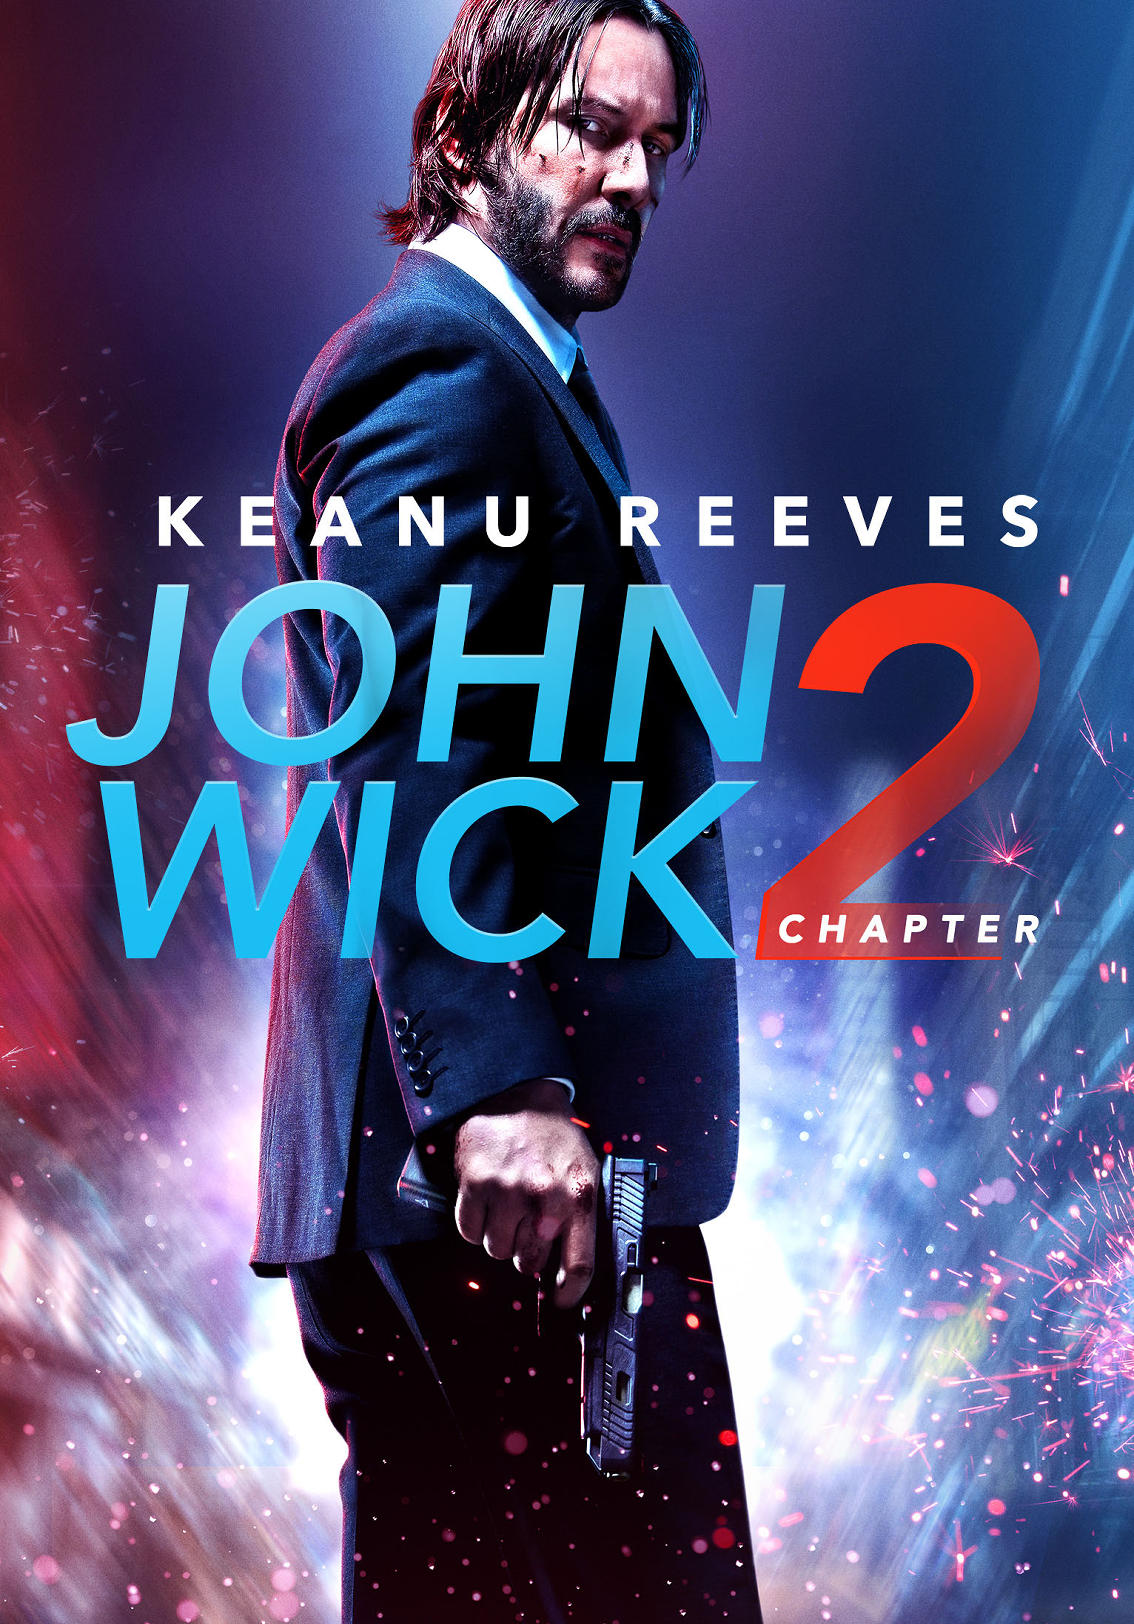 john wick 3 free full movie download